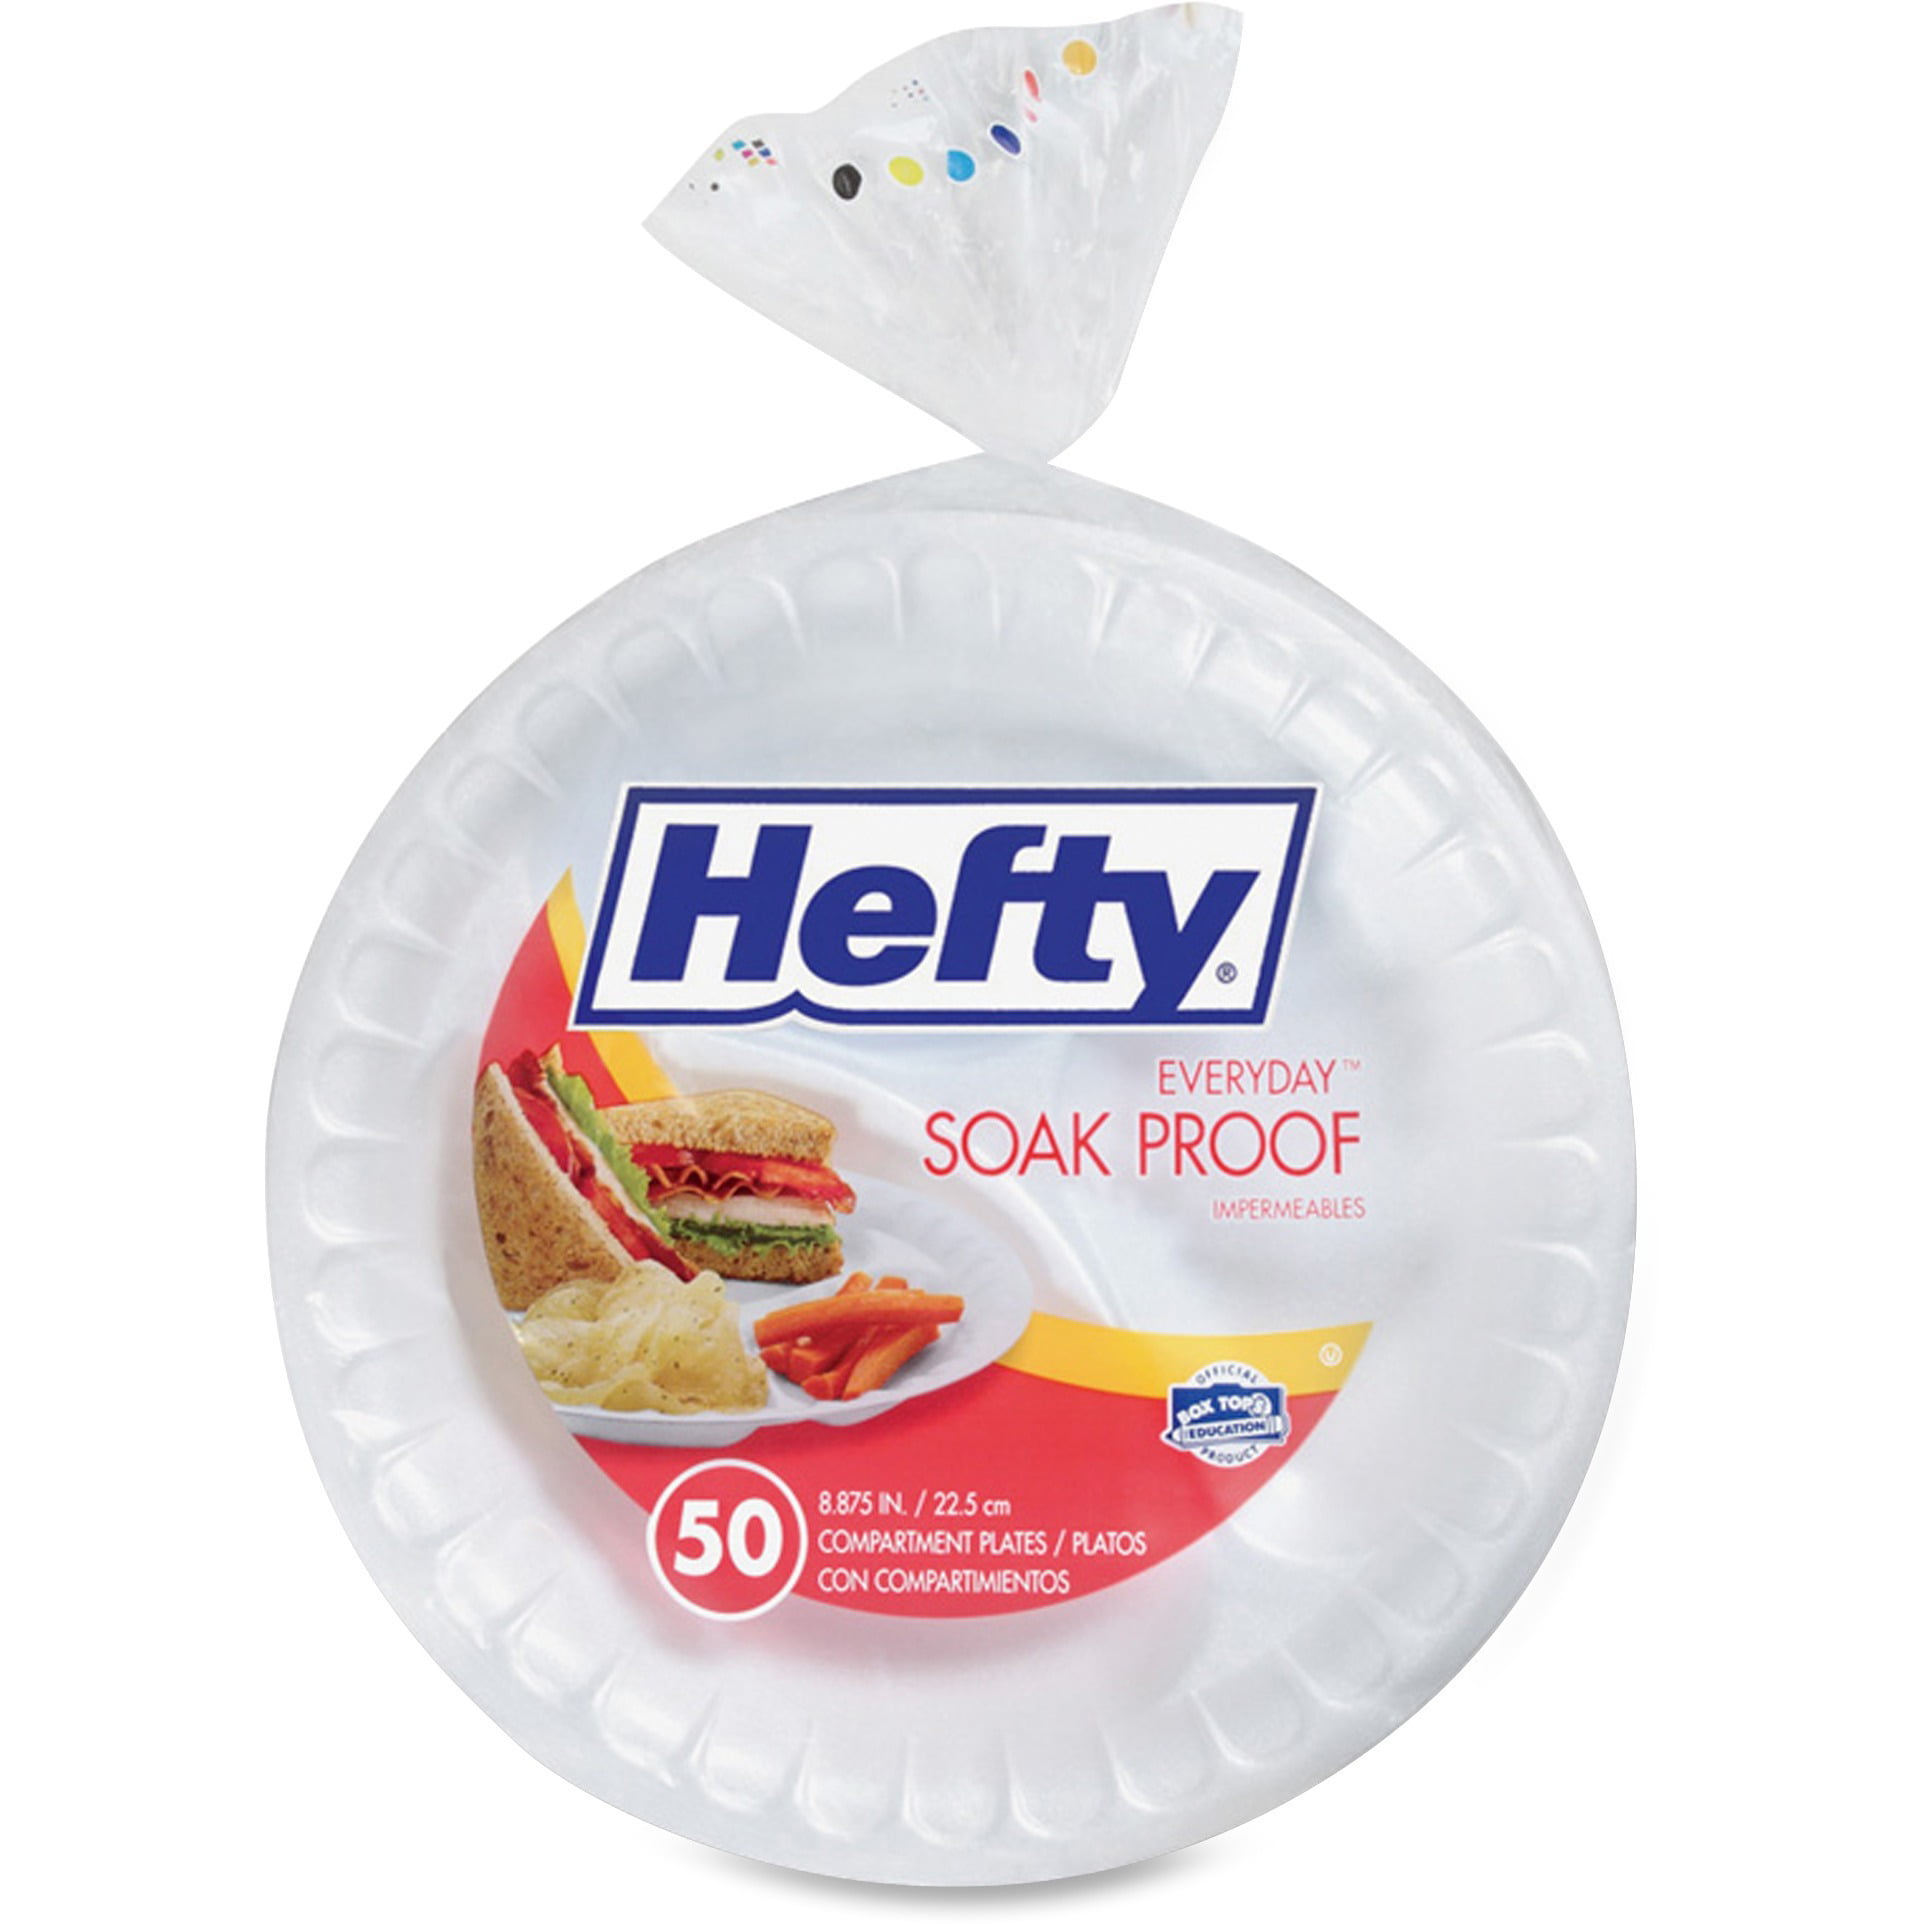 Hefty® Everyday™ 8.875 In. Soak Proof Plates 130 Ct Bag